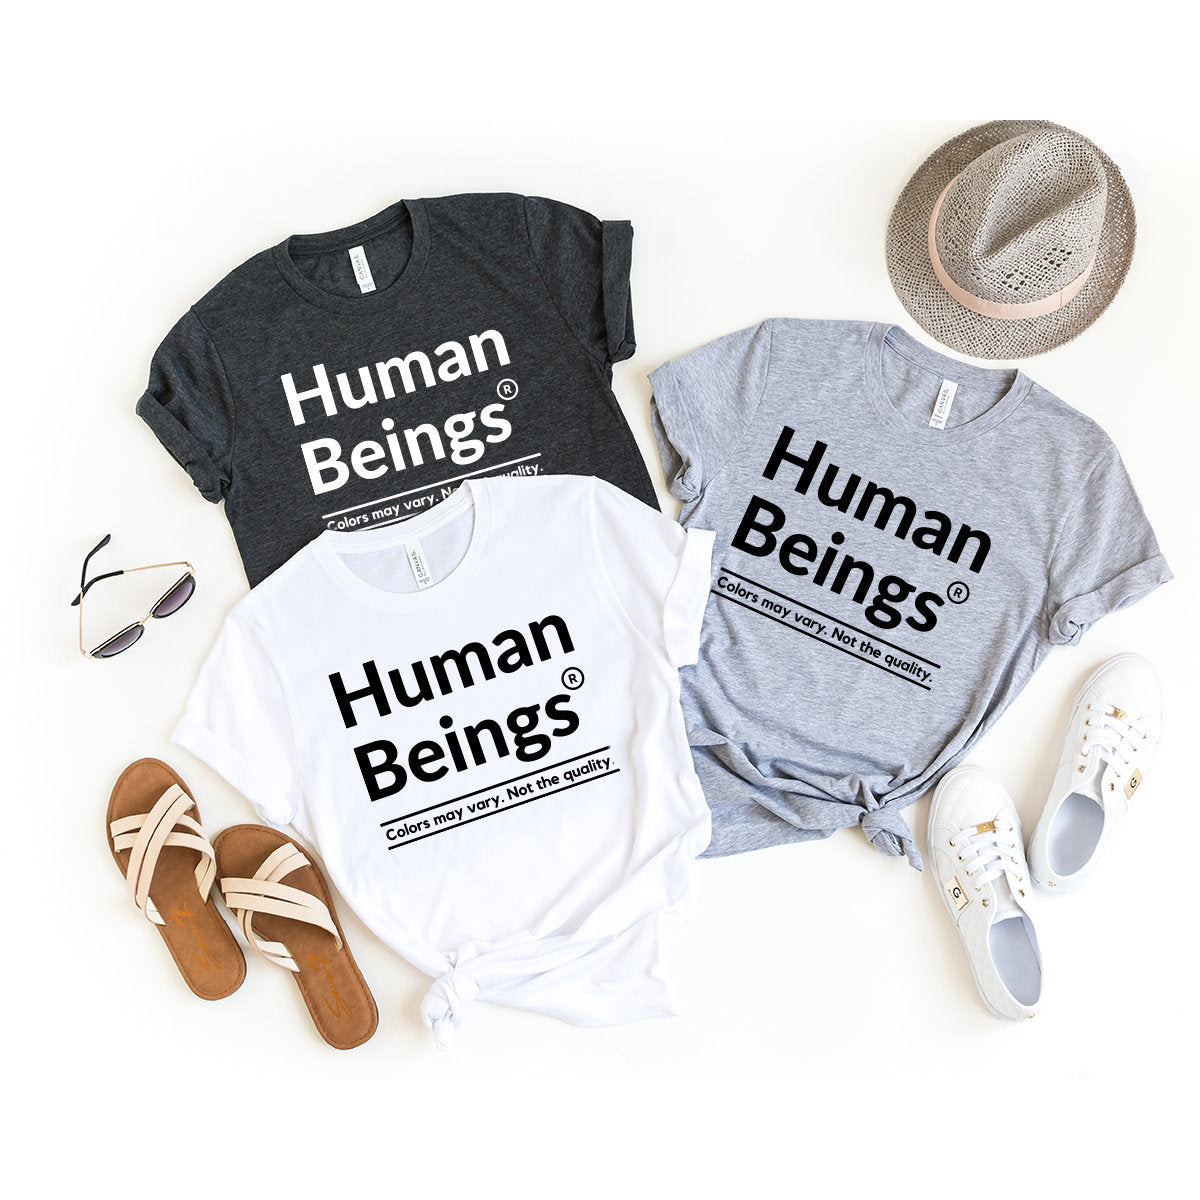 Human Being T-Shirt, BLM Shirt, LGBT Quote Shirt, Equal Rights Shirt, Human Rights Shirt, Gender Equality Shirt, Pride Shirt, Protest Shirt - Fastdeliverytees.com